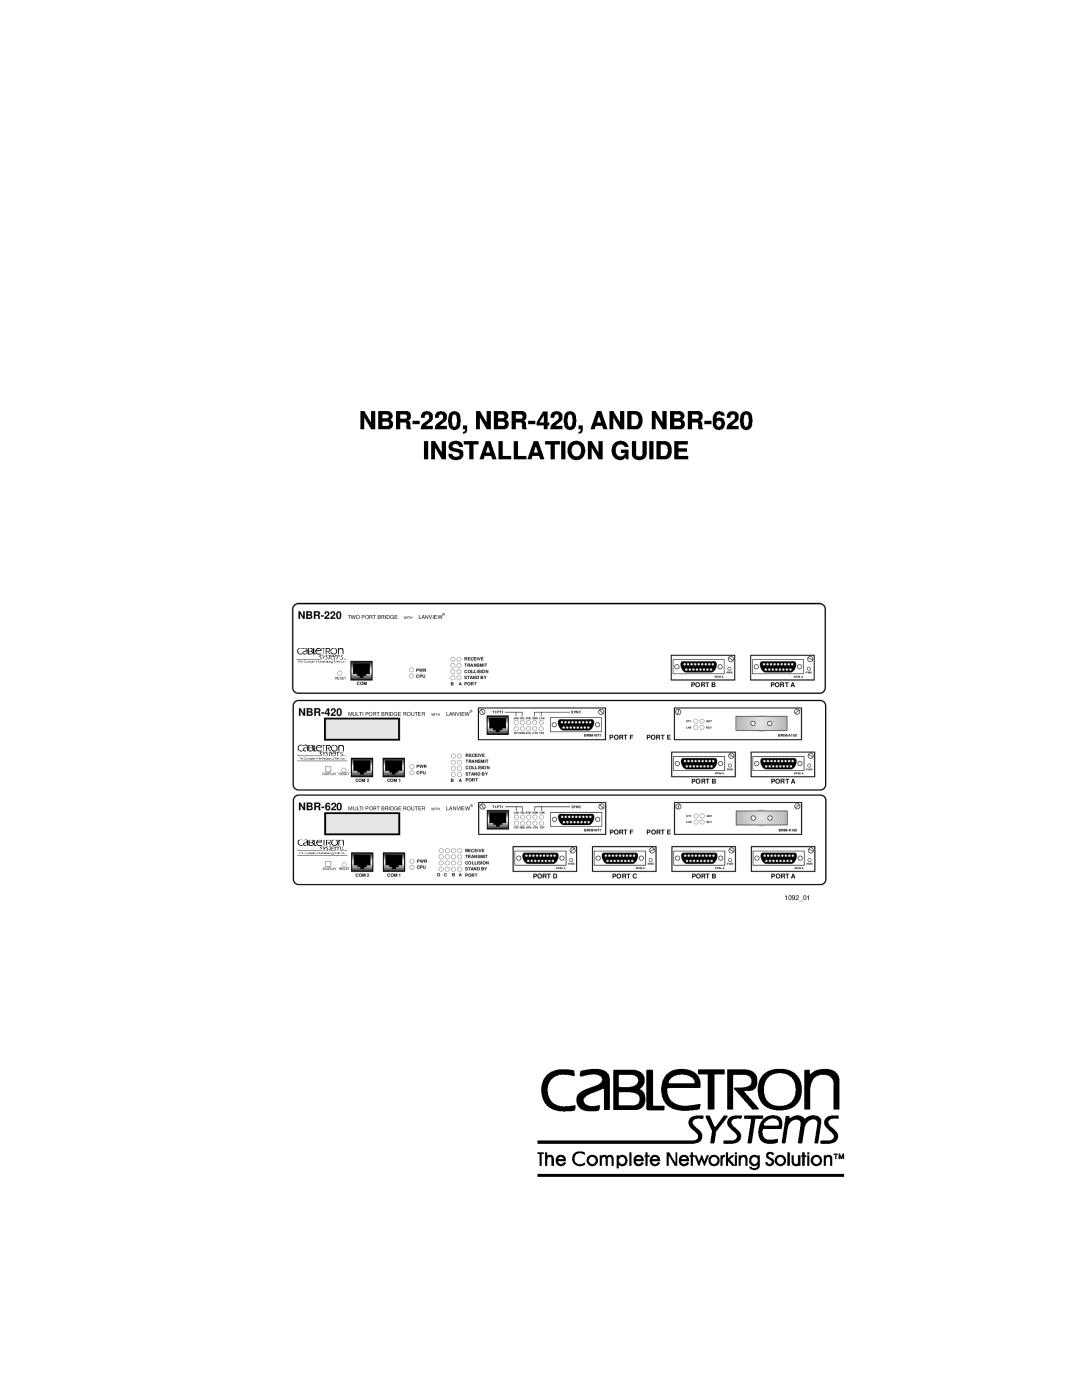 Cabletron Systems manual NBR-220, NBR-420, AND NBR-620 INSTALLATION GUIDE, Port B, Port A, Port F, Port E, Port D 